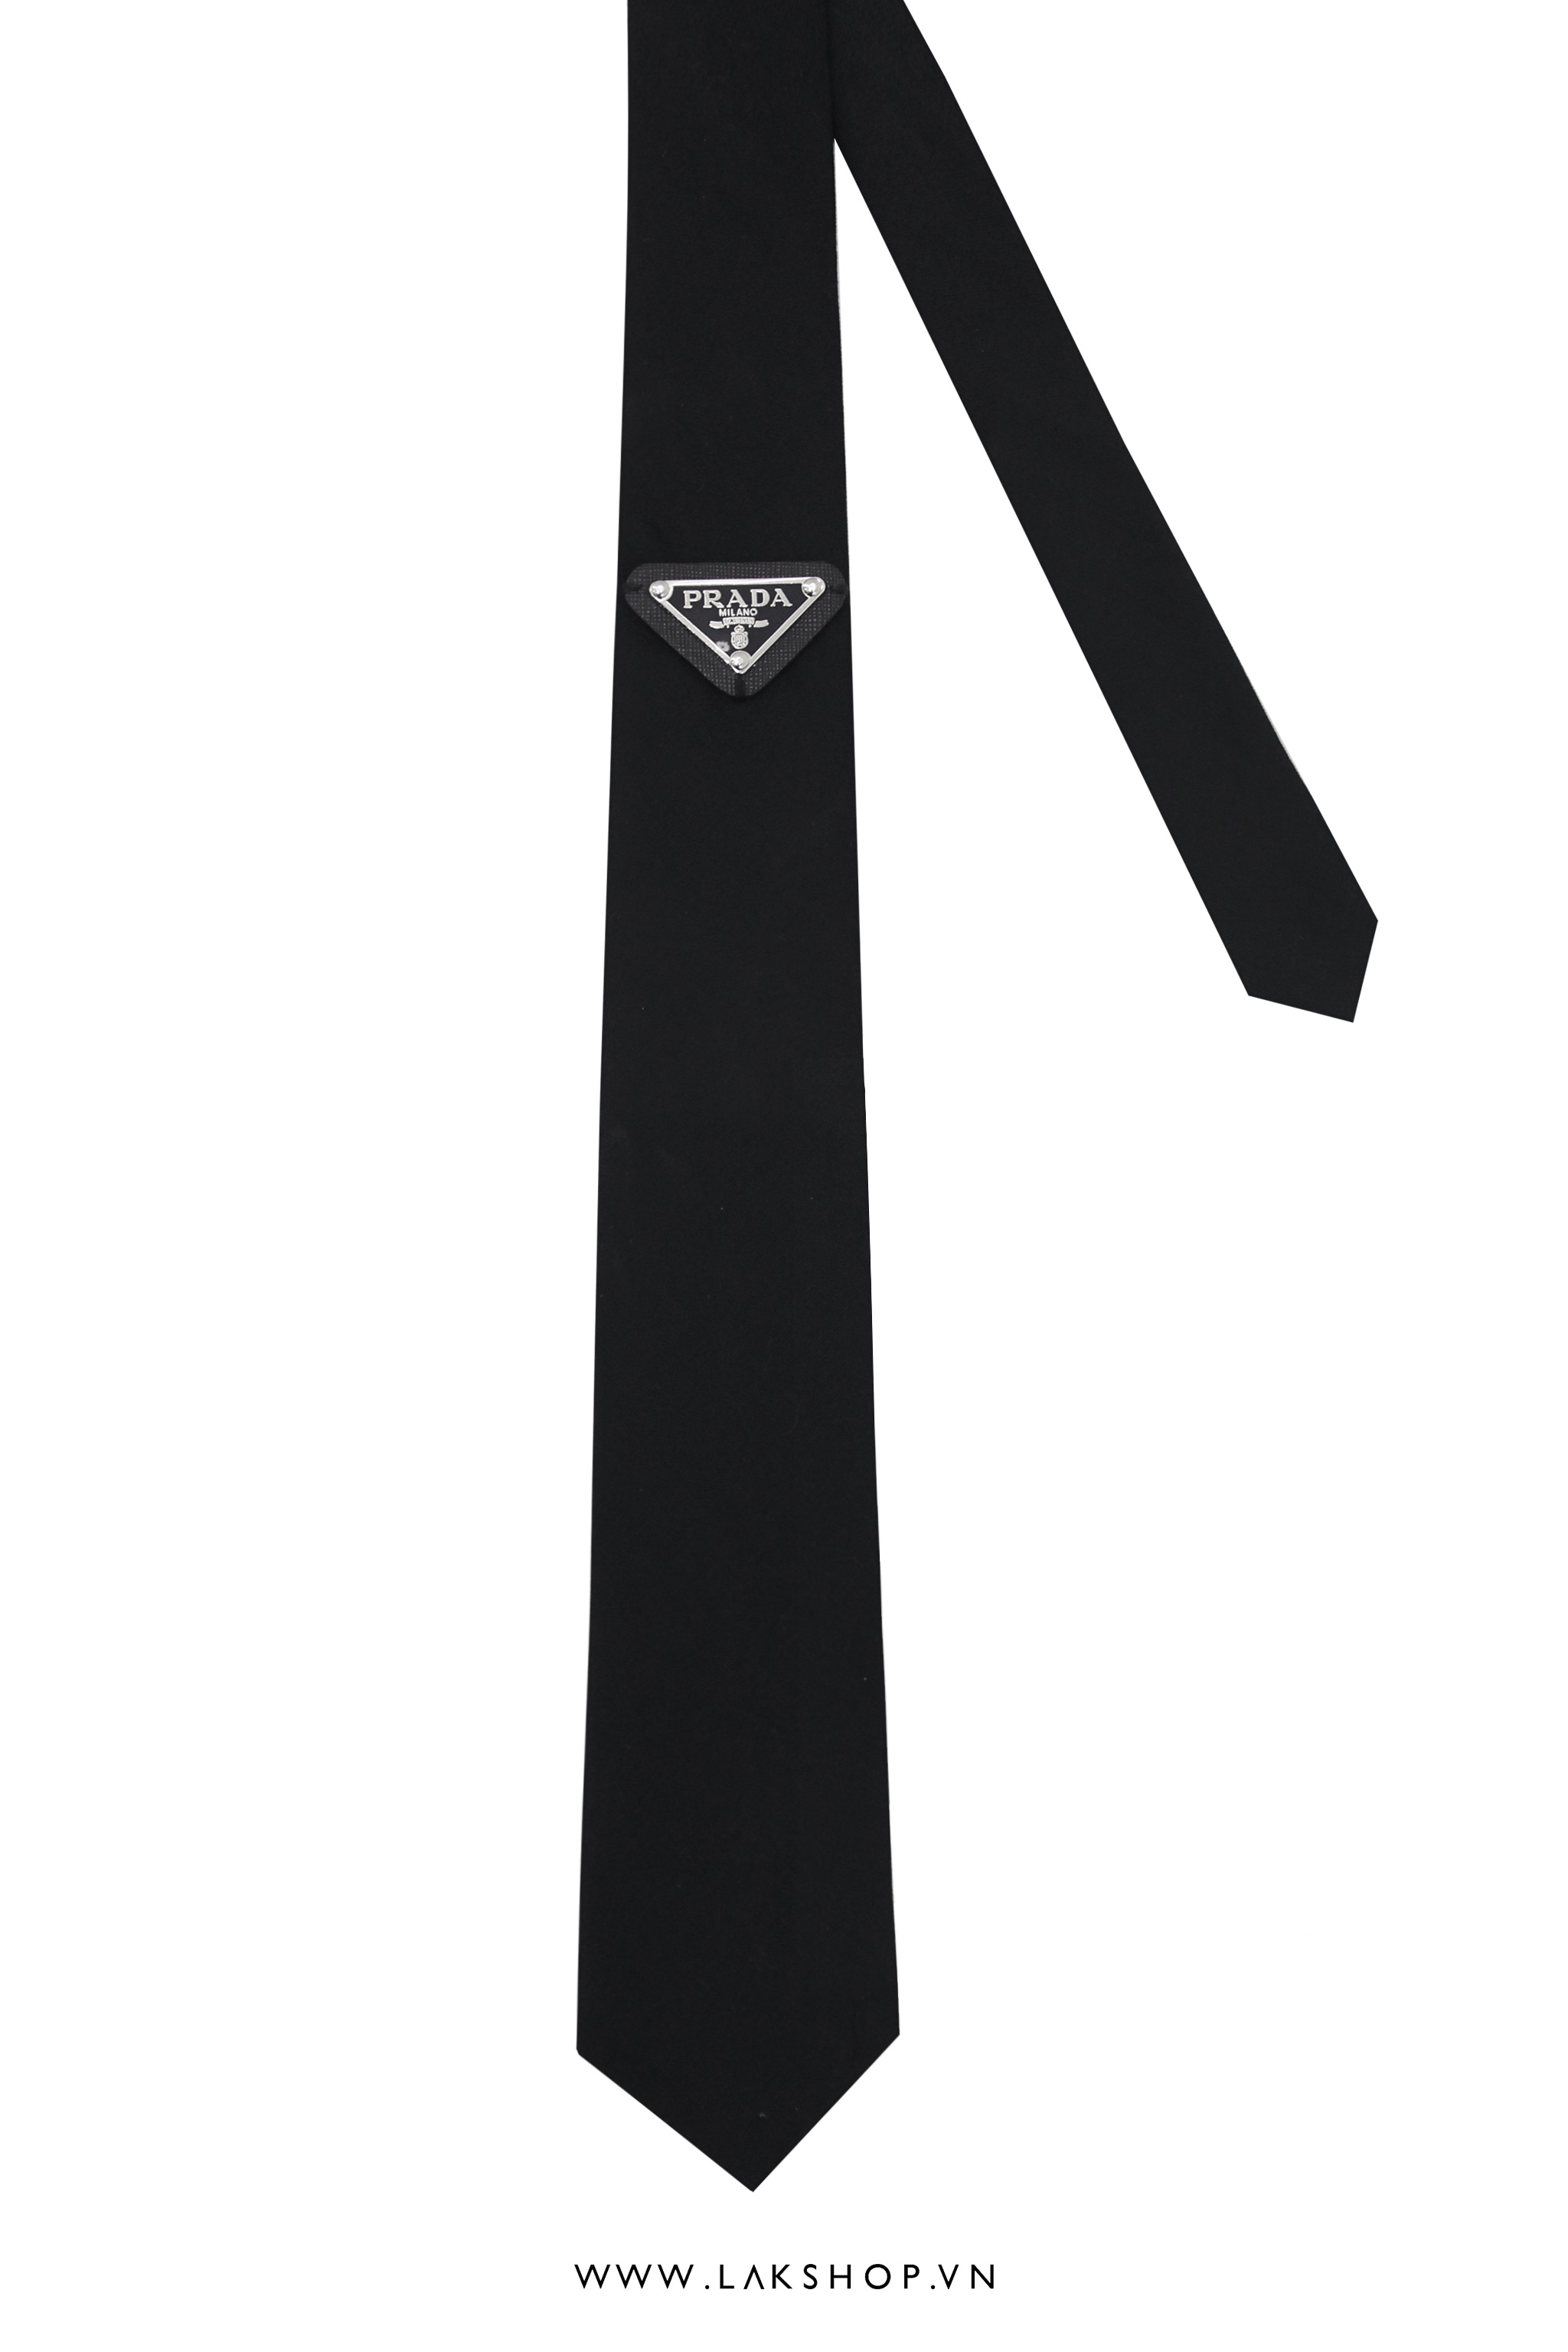 Cà Vạt Pr@da Logo Gabardine Tie In Black (7cm) Lak Shop - 276 Phố ...